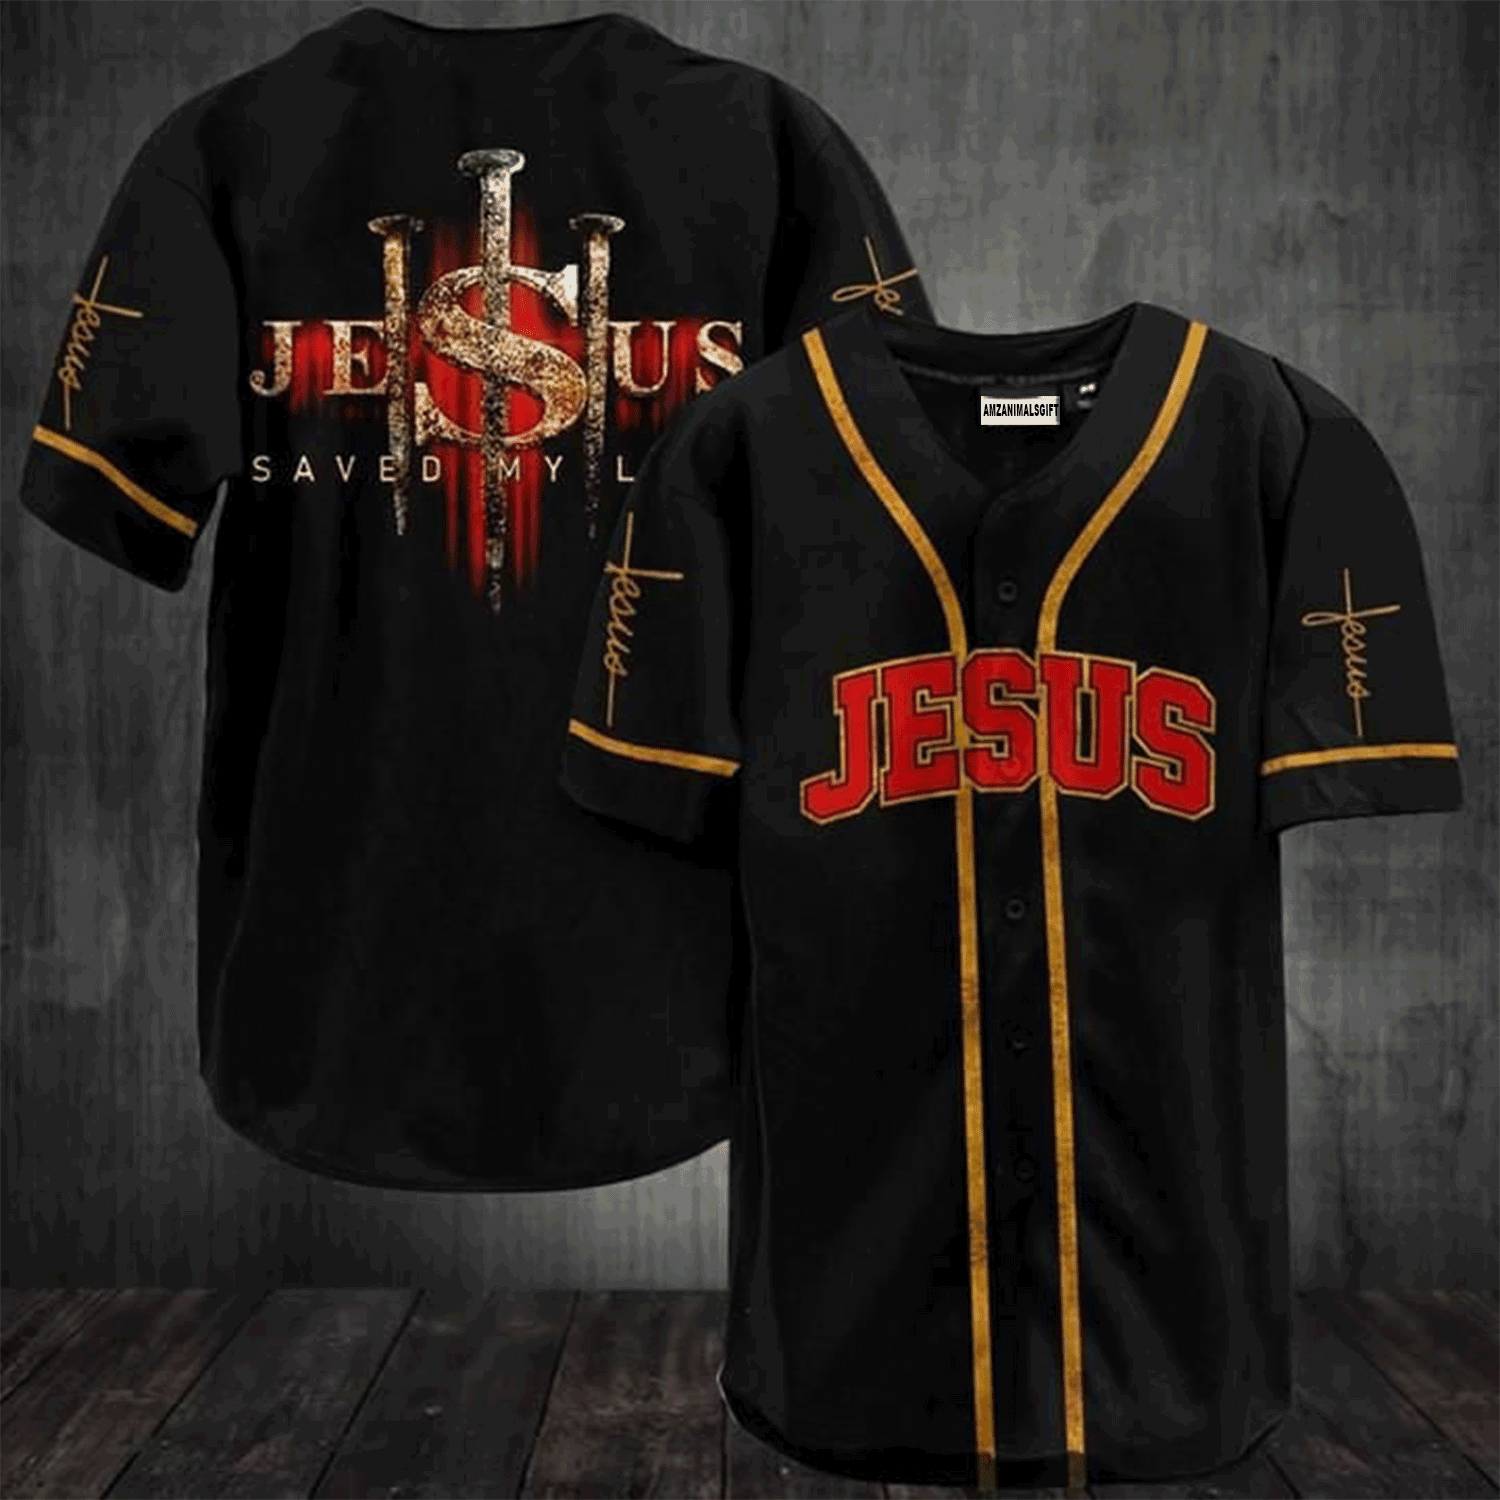 Jesus Baseball Jersey Shirt - Jesus Saved My Life Baseball Jersey For Men & Women, Perfect Gift For Christian